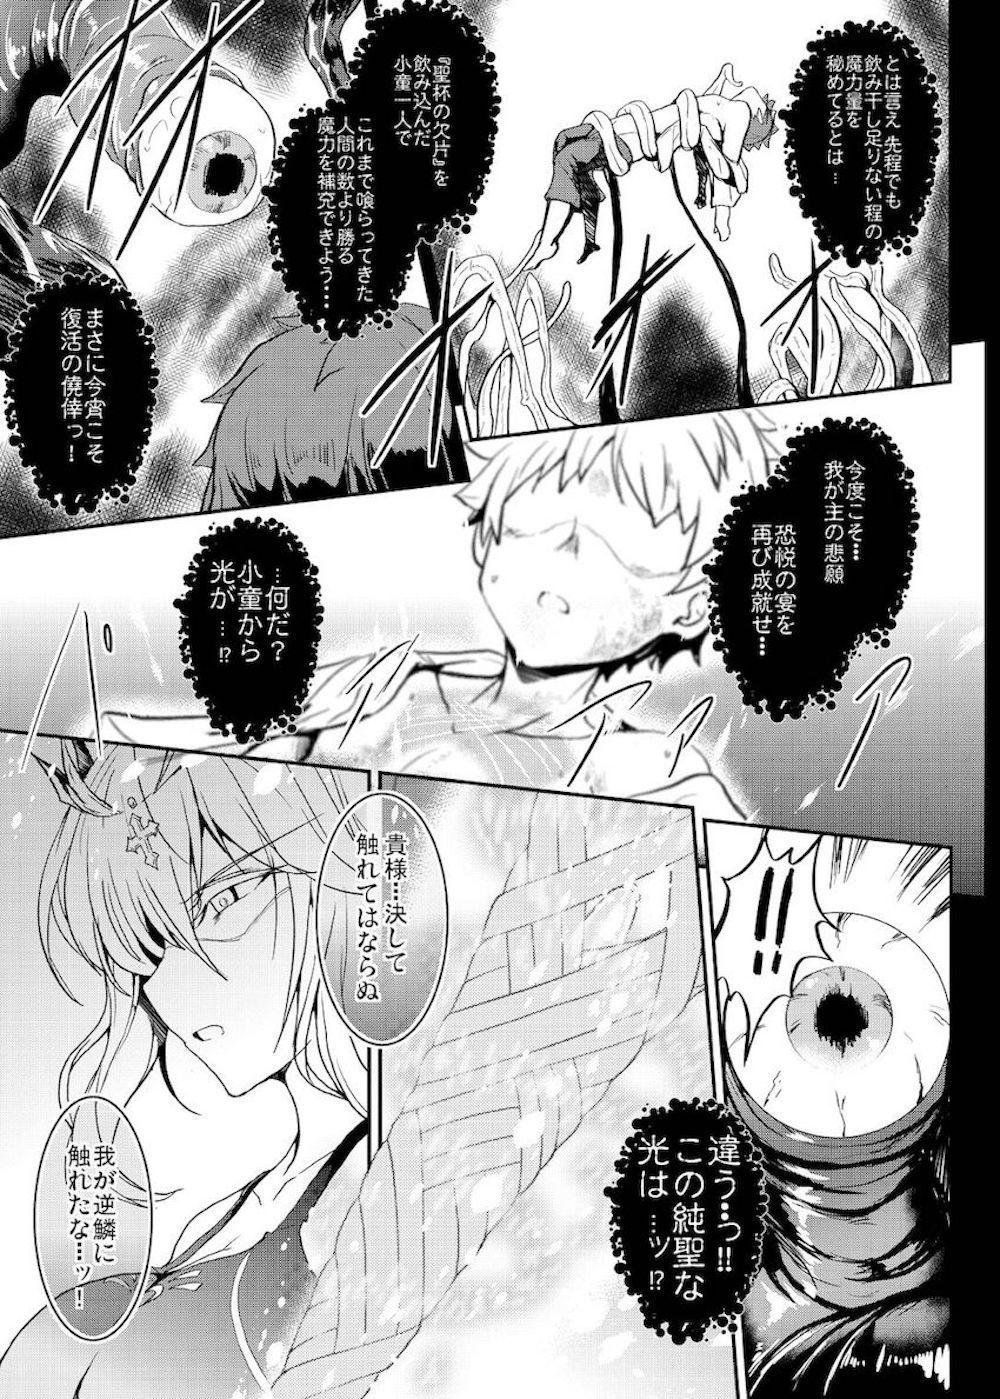 【Fate/Grand Order】鍛錬を頑張って汗だくの衛宮士郎を一緒にお風呂に誘うアルトリアが誘惑してエッチな事をいっぱい教え込んじゃう女性優位な痴女セックス78